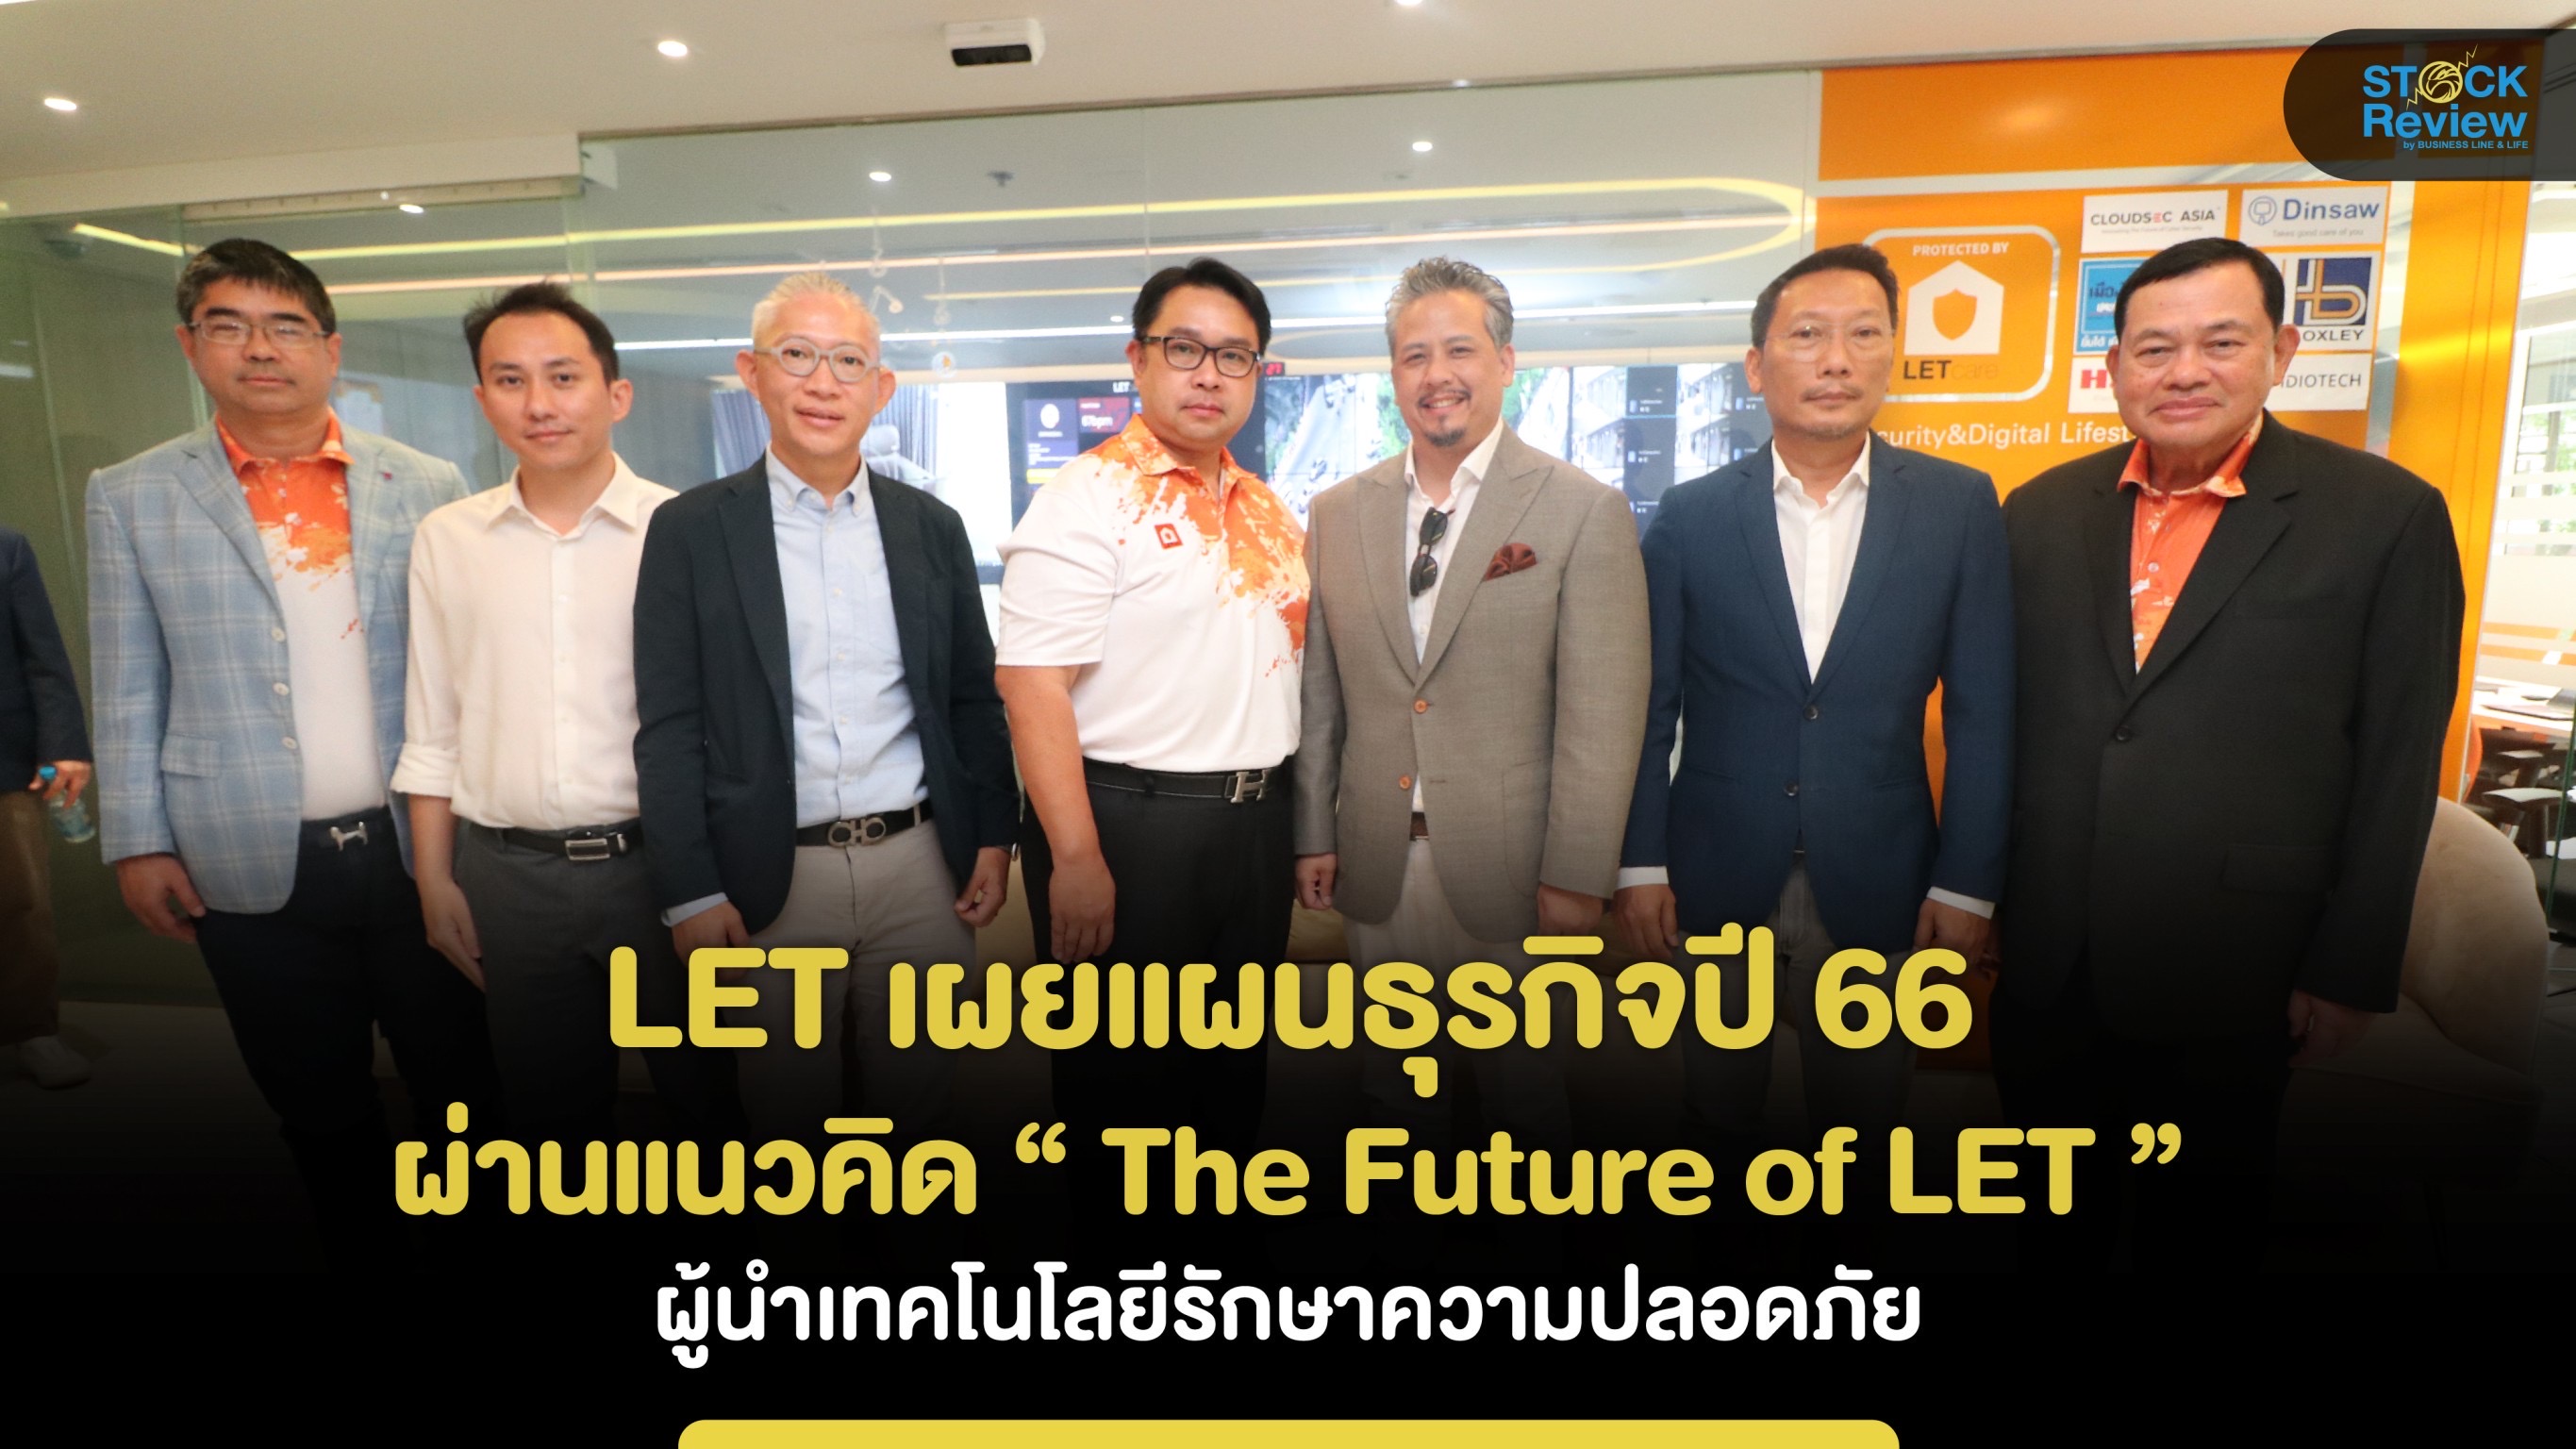 LET กางแผนธุรกิจปี 66  “The Future of LET” ลุยตลาด B2B-B2C